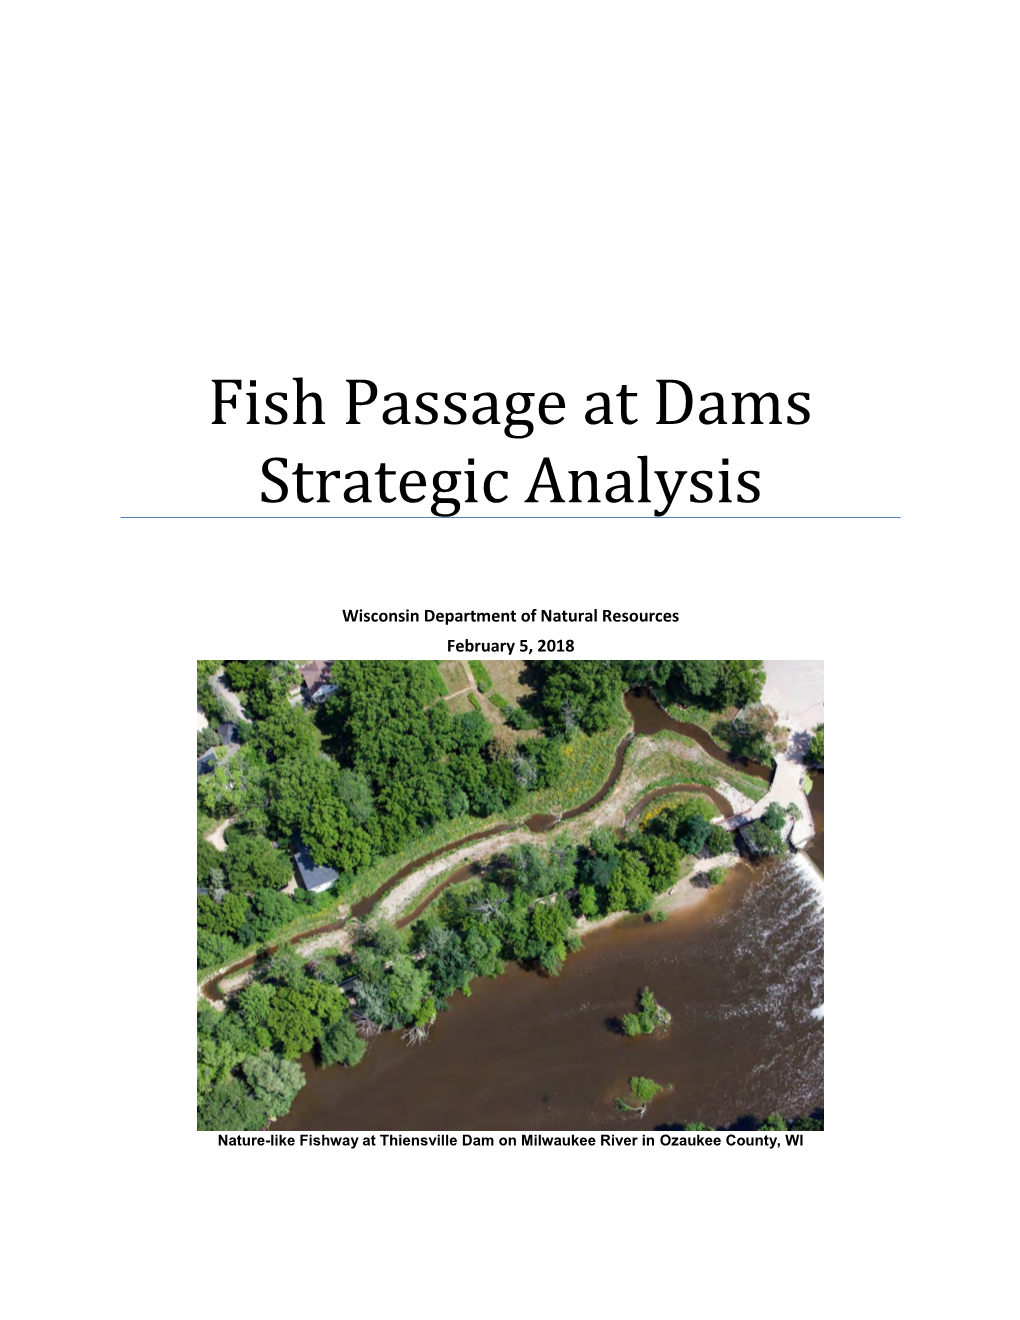 Fish Passage at Dams Strategic Analysis